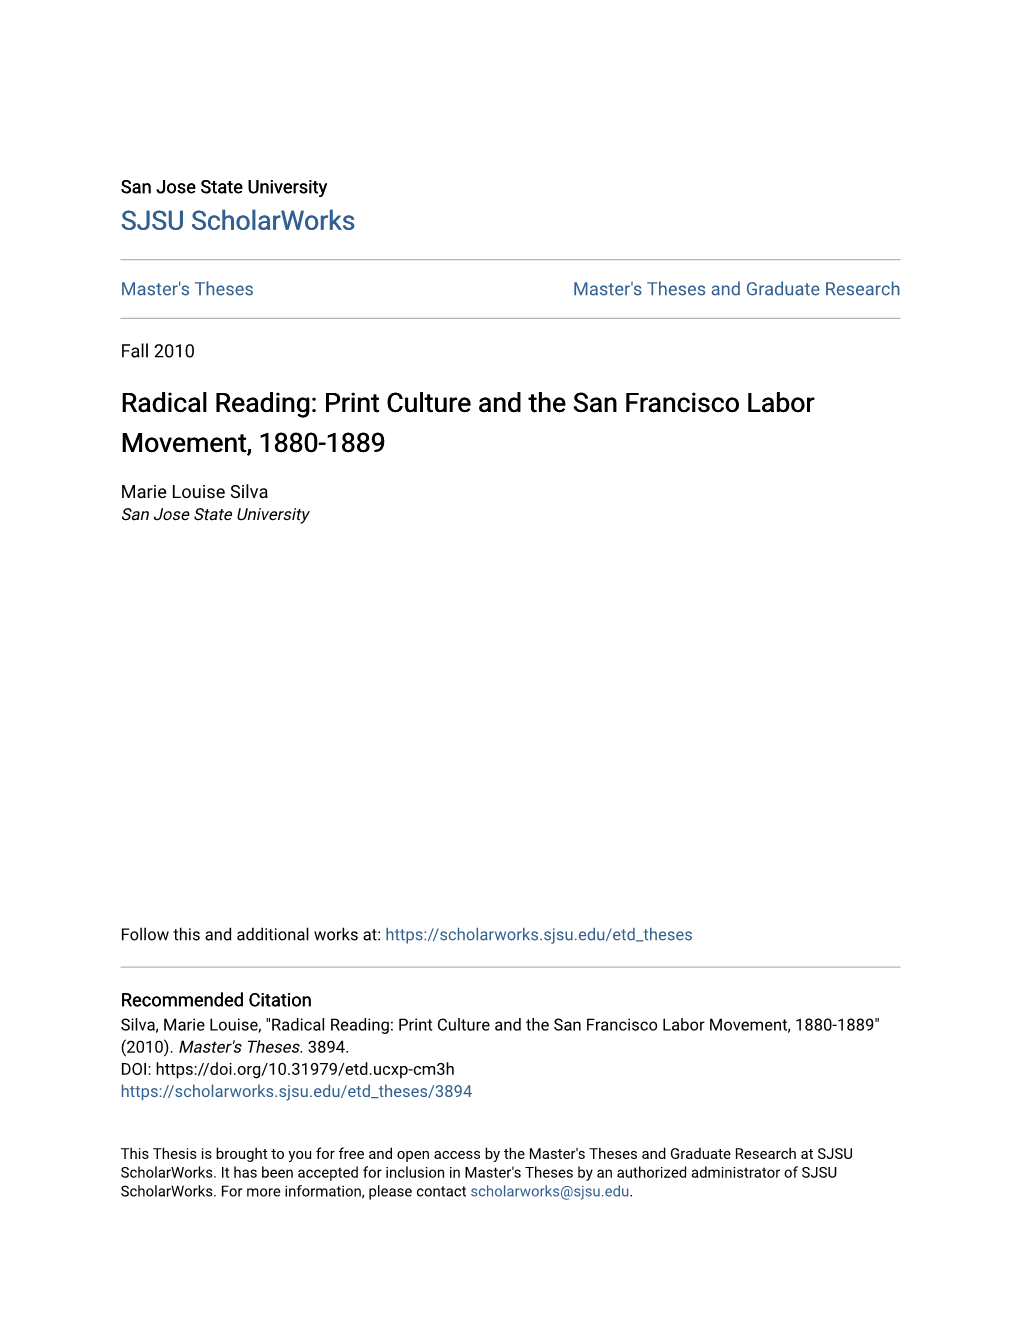 Print Culture and the San Francisco Labor Movement, 1880-1889